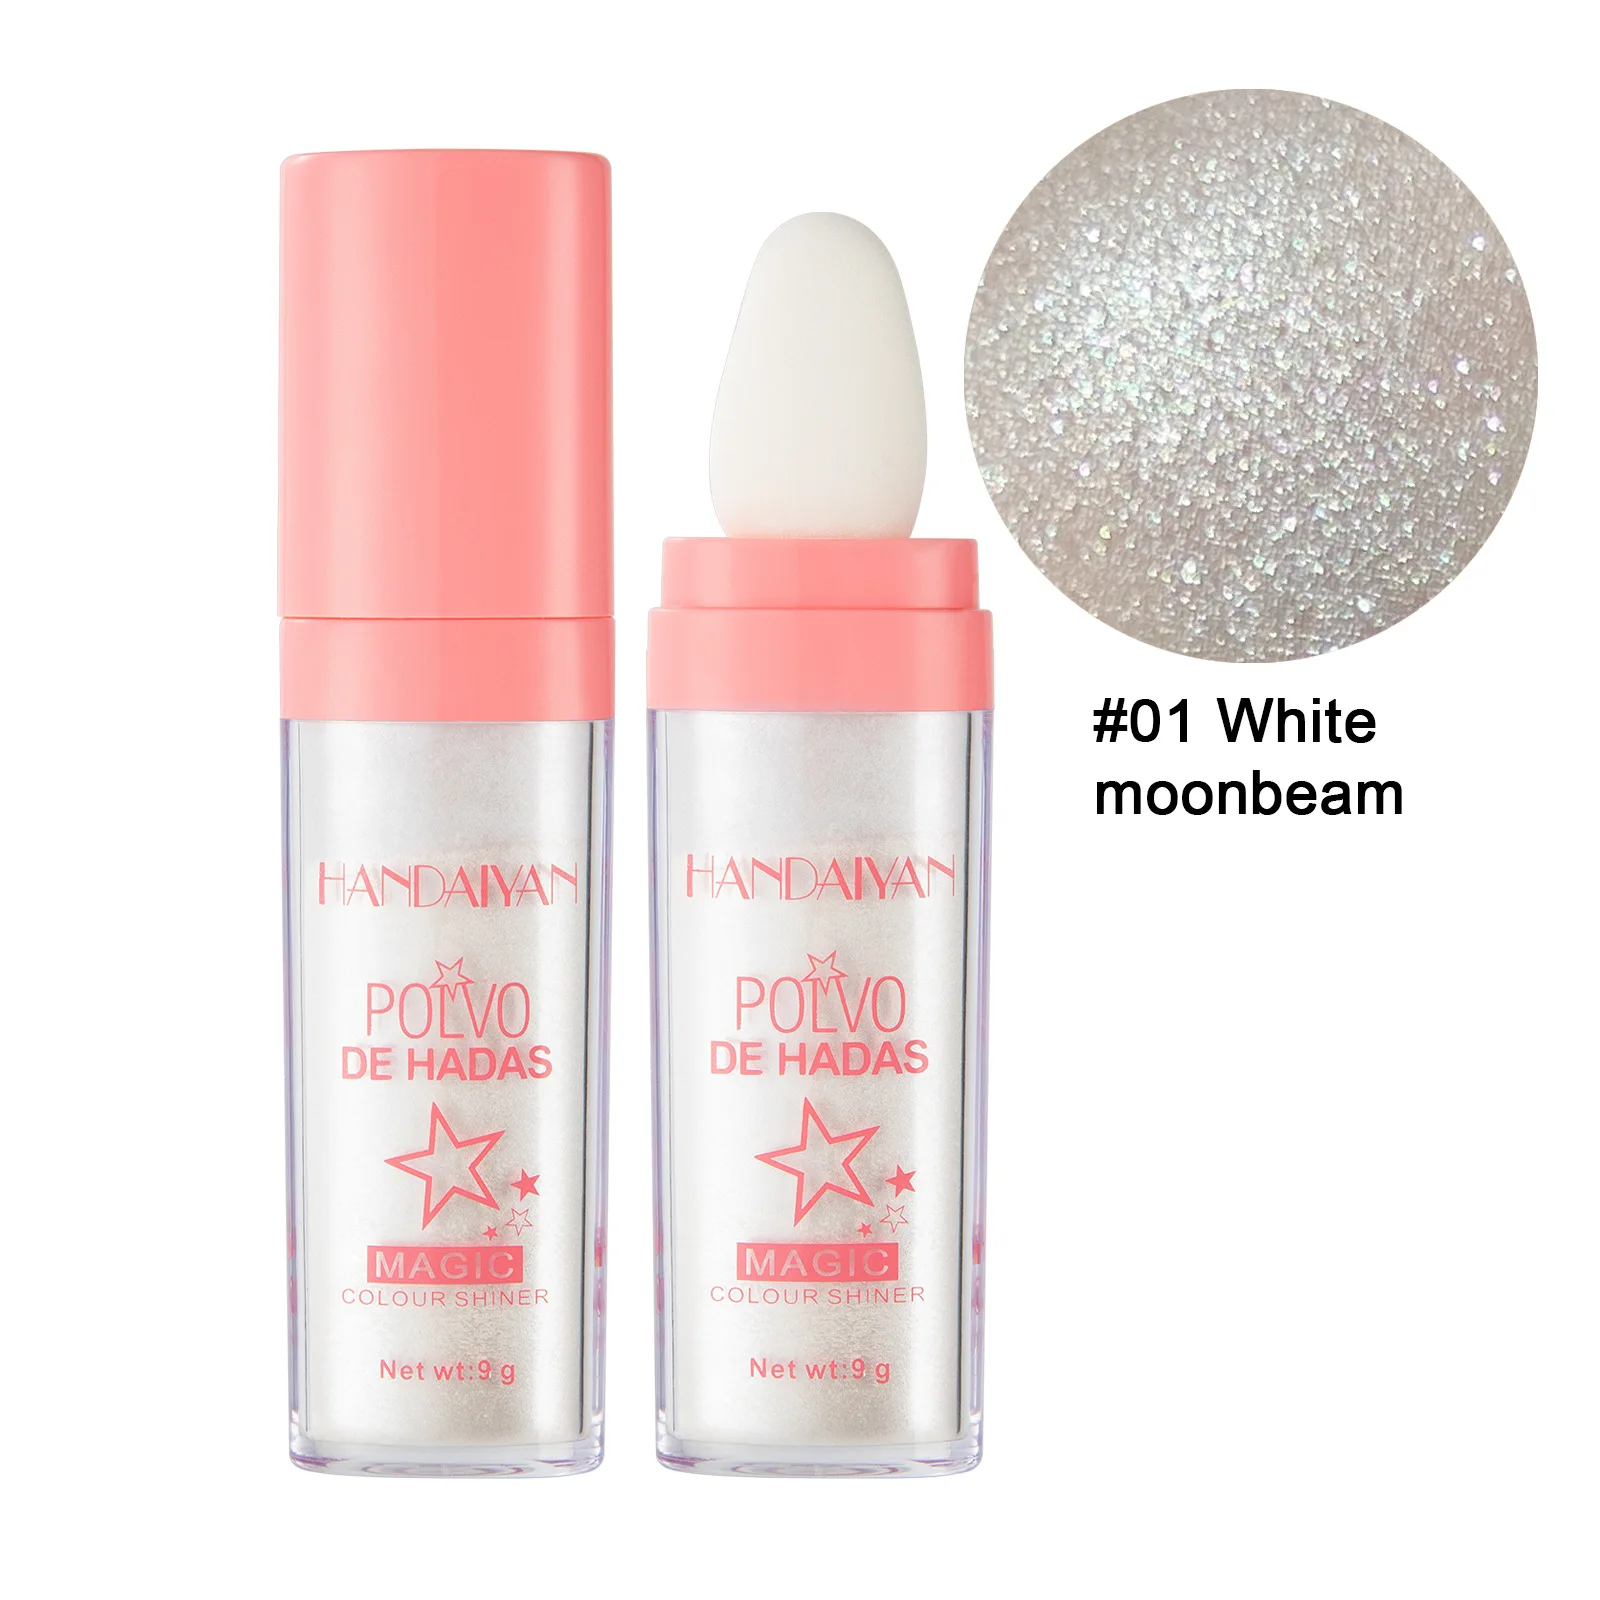 3 Colors Highlighter Powder Polvo De Hadas Glitter Powder Shimmer Contour Blush Powder Makeup for Face Body Highlight Makeup 9g